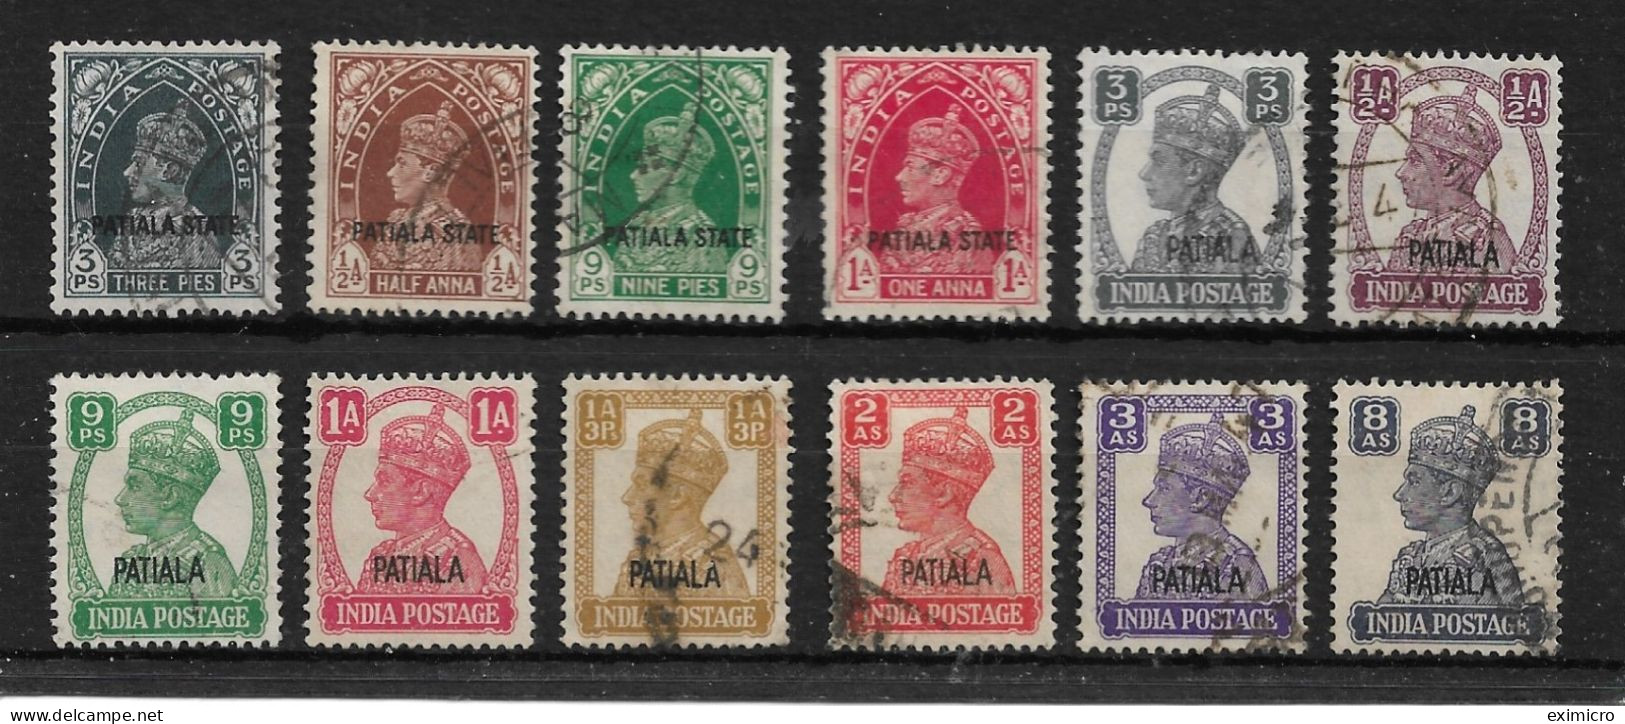 INDIA - PATIALA 1937 - 1946 FINE USED SELECTION SG 80/83, 103/107, 109, 110, 112 Cat £15+ - Patiala